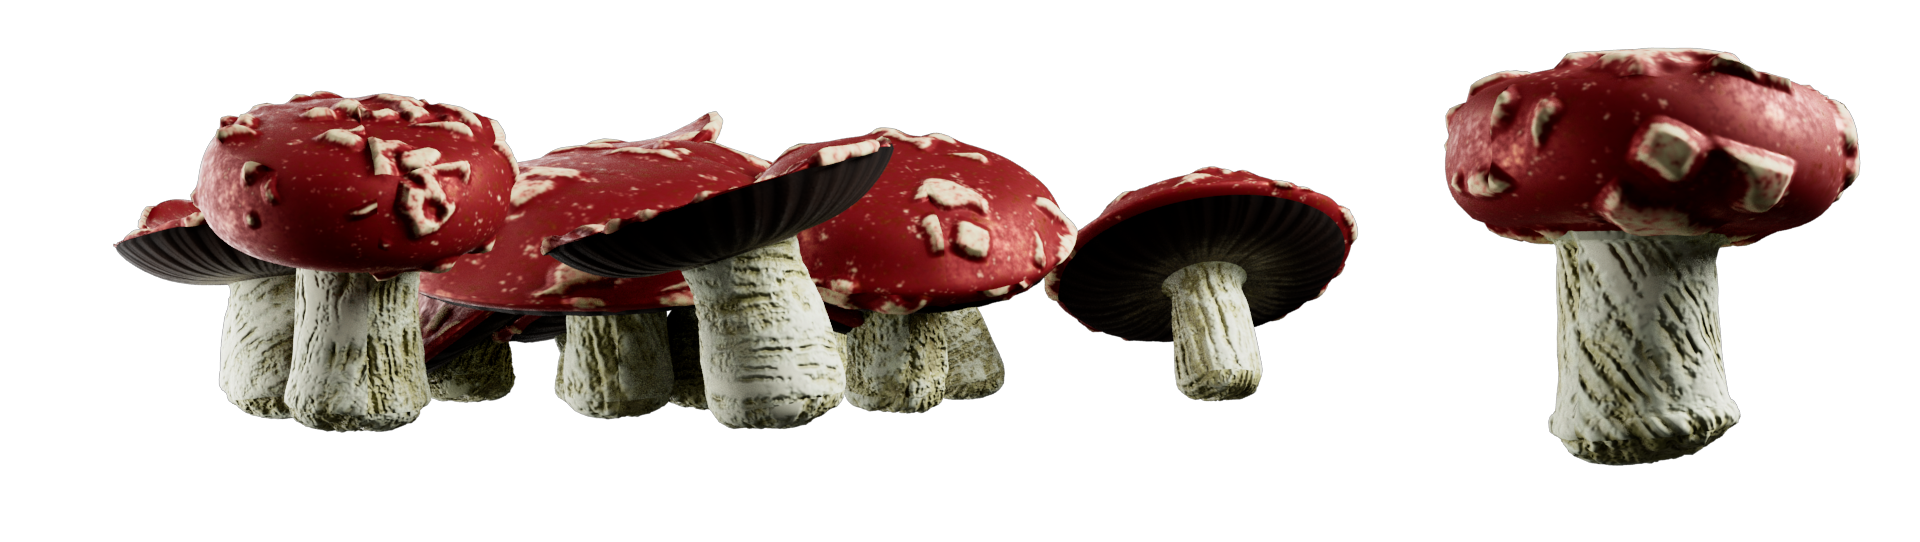 m/mushrooms image 2